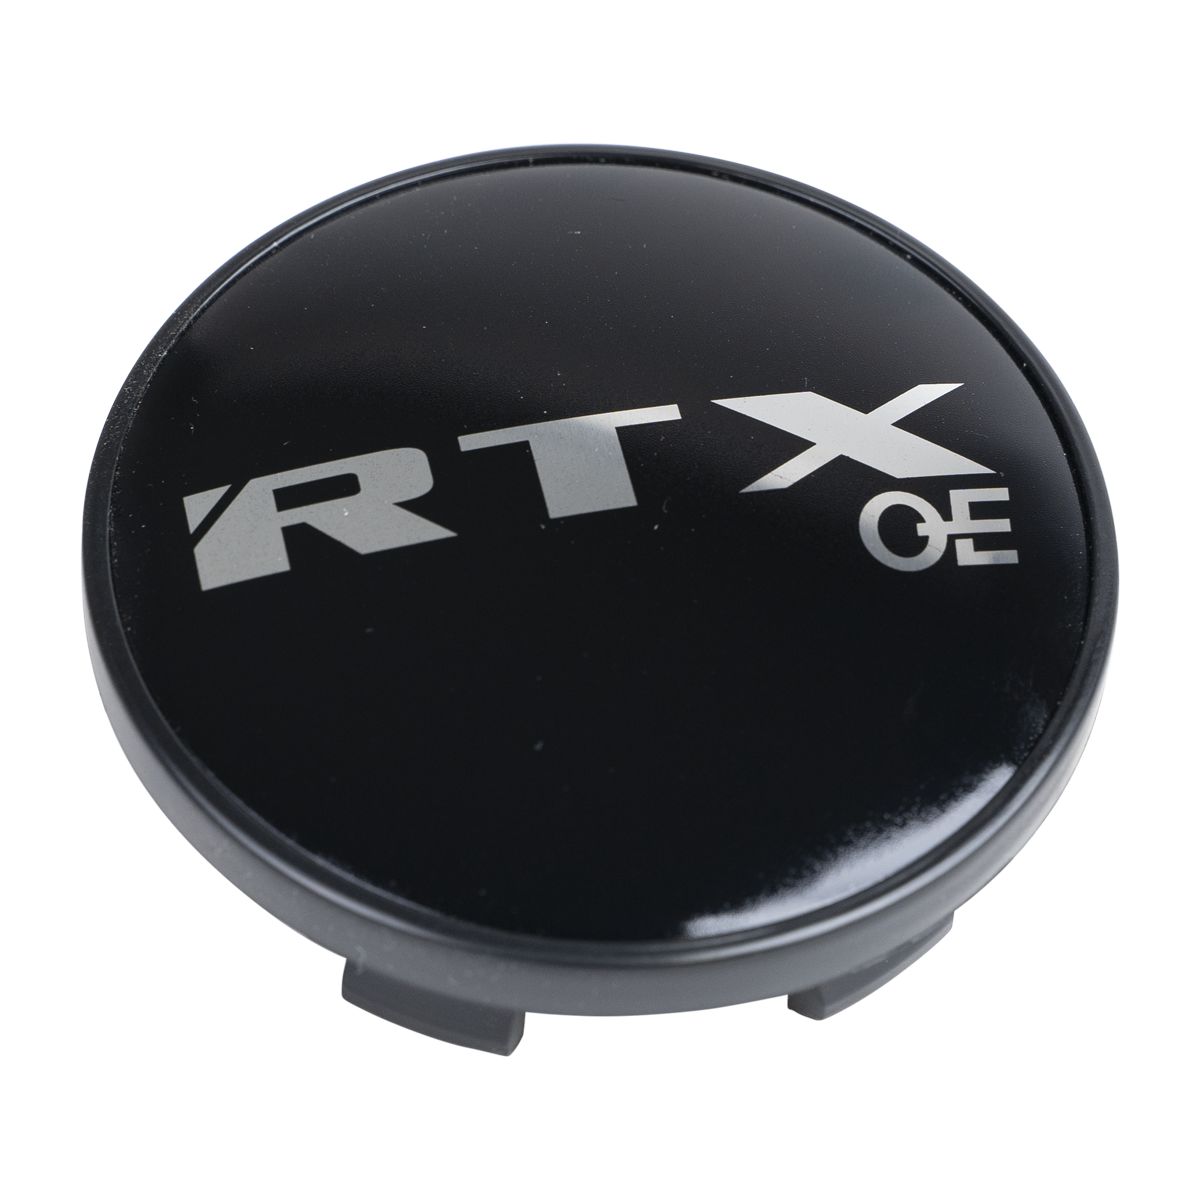 RTX 9098K67B1OE - Center Cap Gloss Black RTXoe Chrome & Black Background